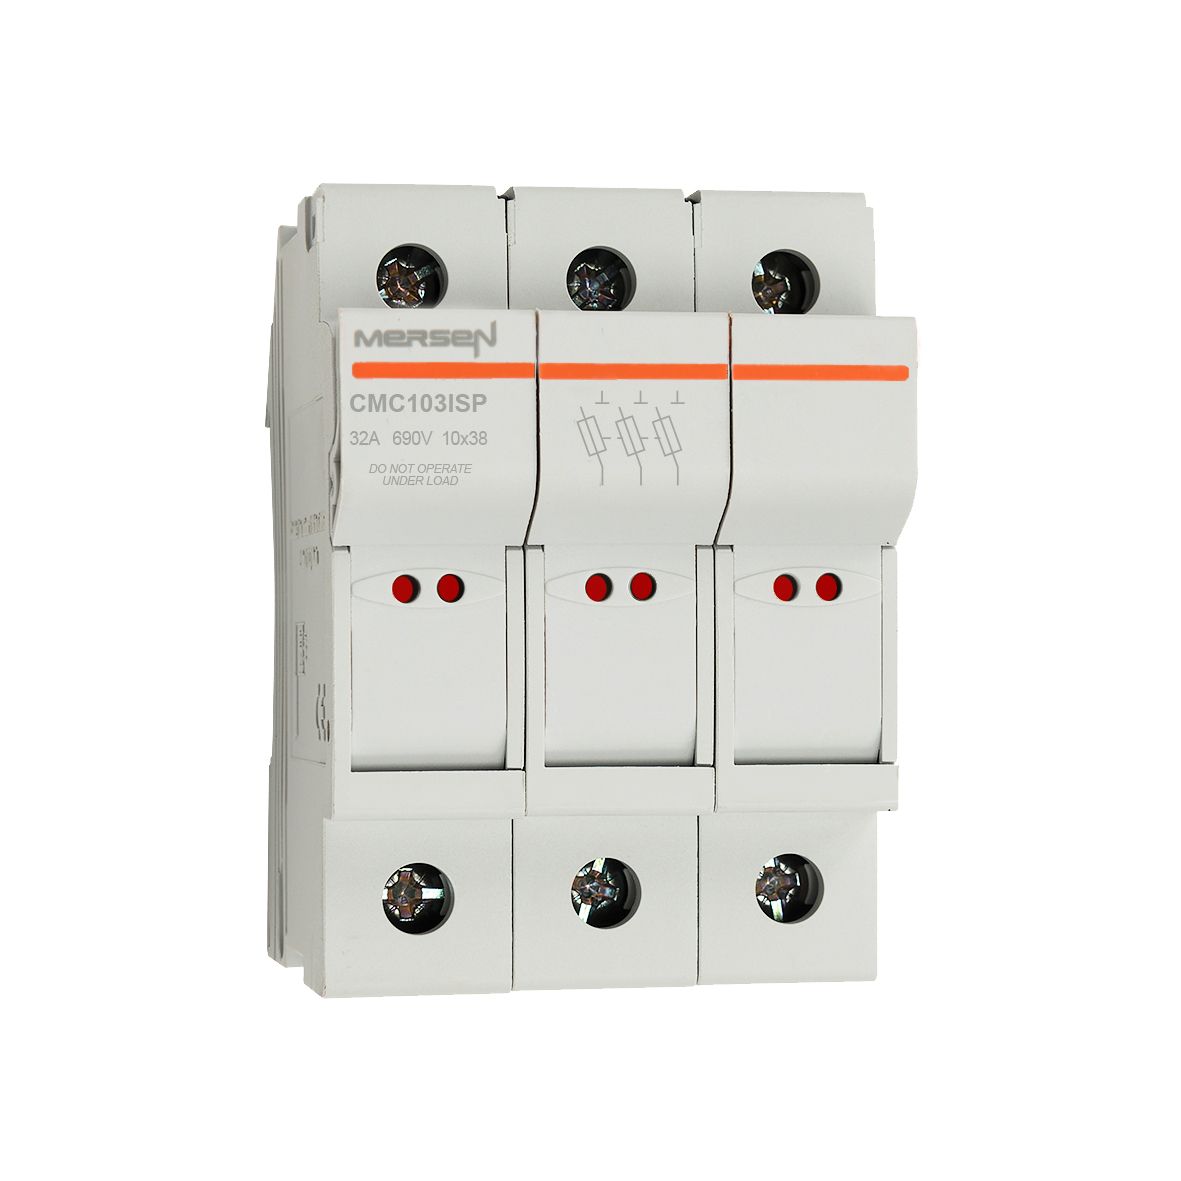 E1062765 - modular fuse holder, IEC, 3P, indicator light, 10x38, DIN rail mounting, IP20